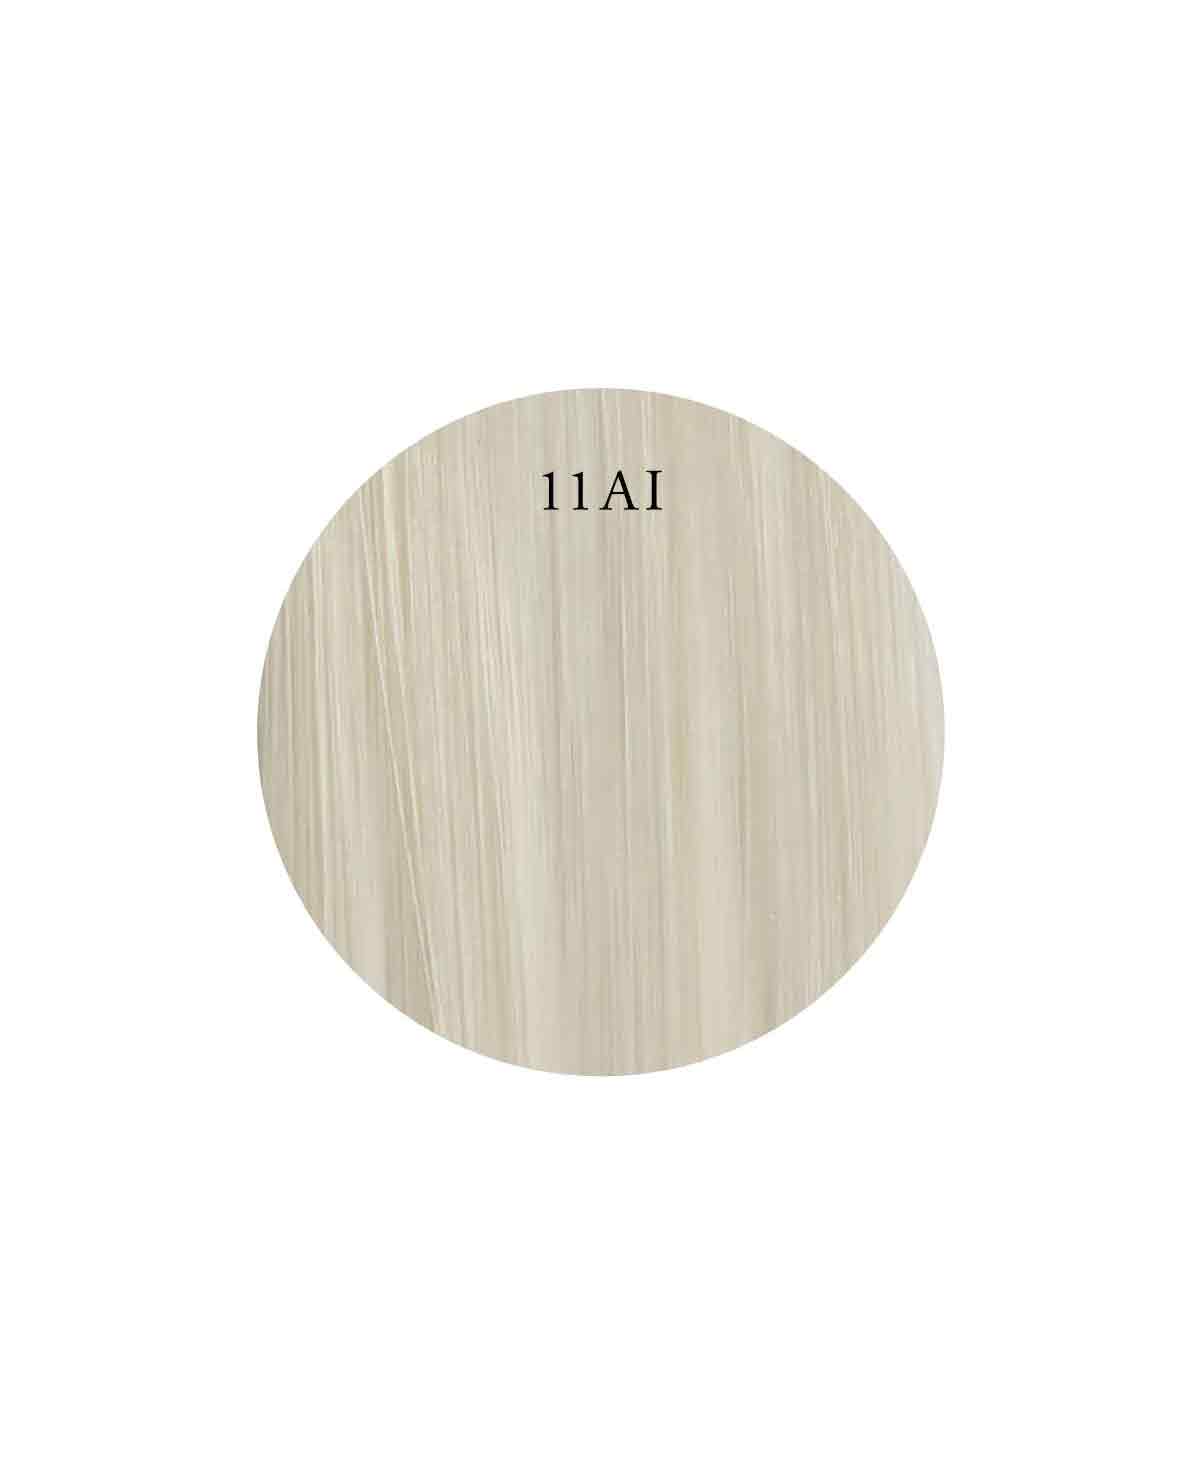 Showpony 55-60cm (24") Slim Tape Extensions - White Blonde - 11AI